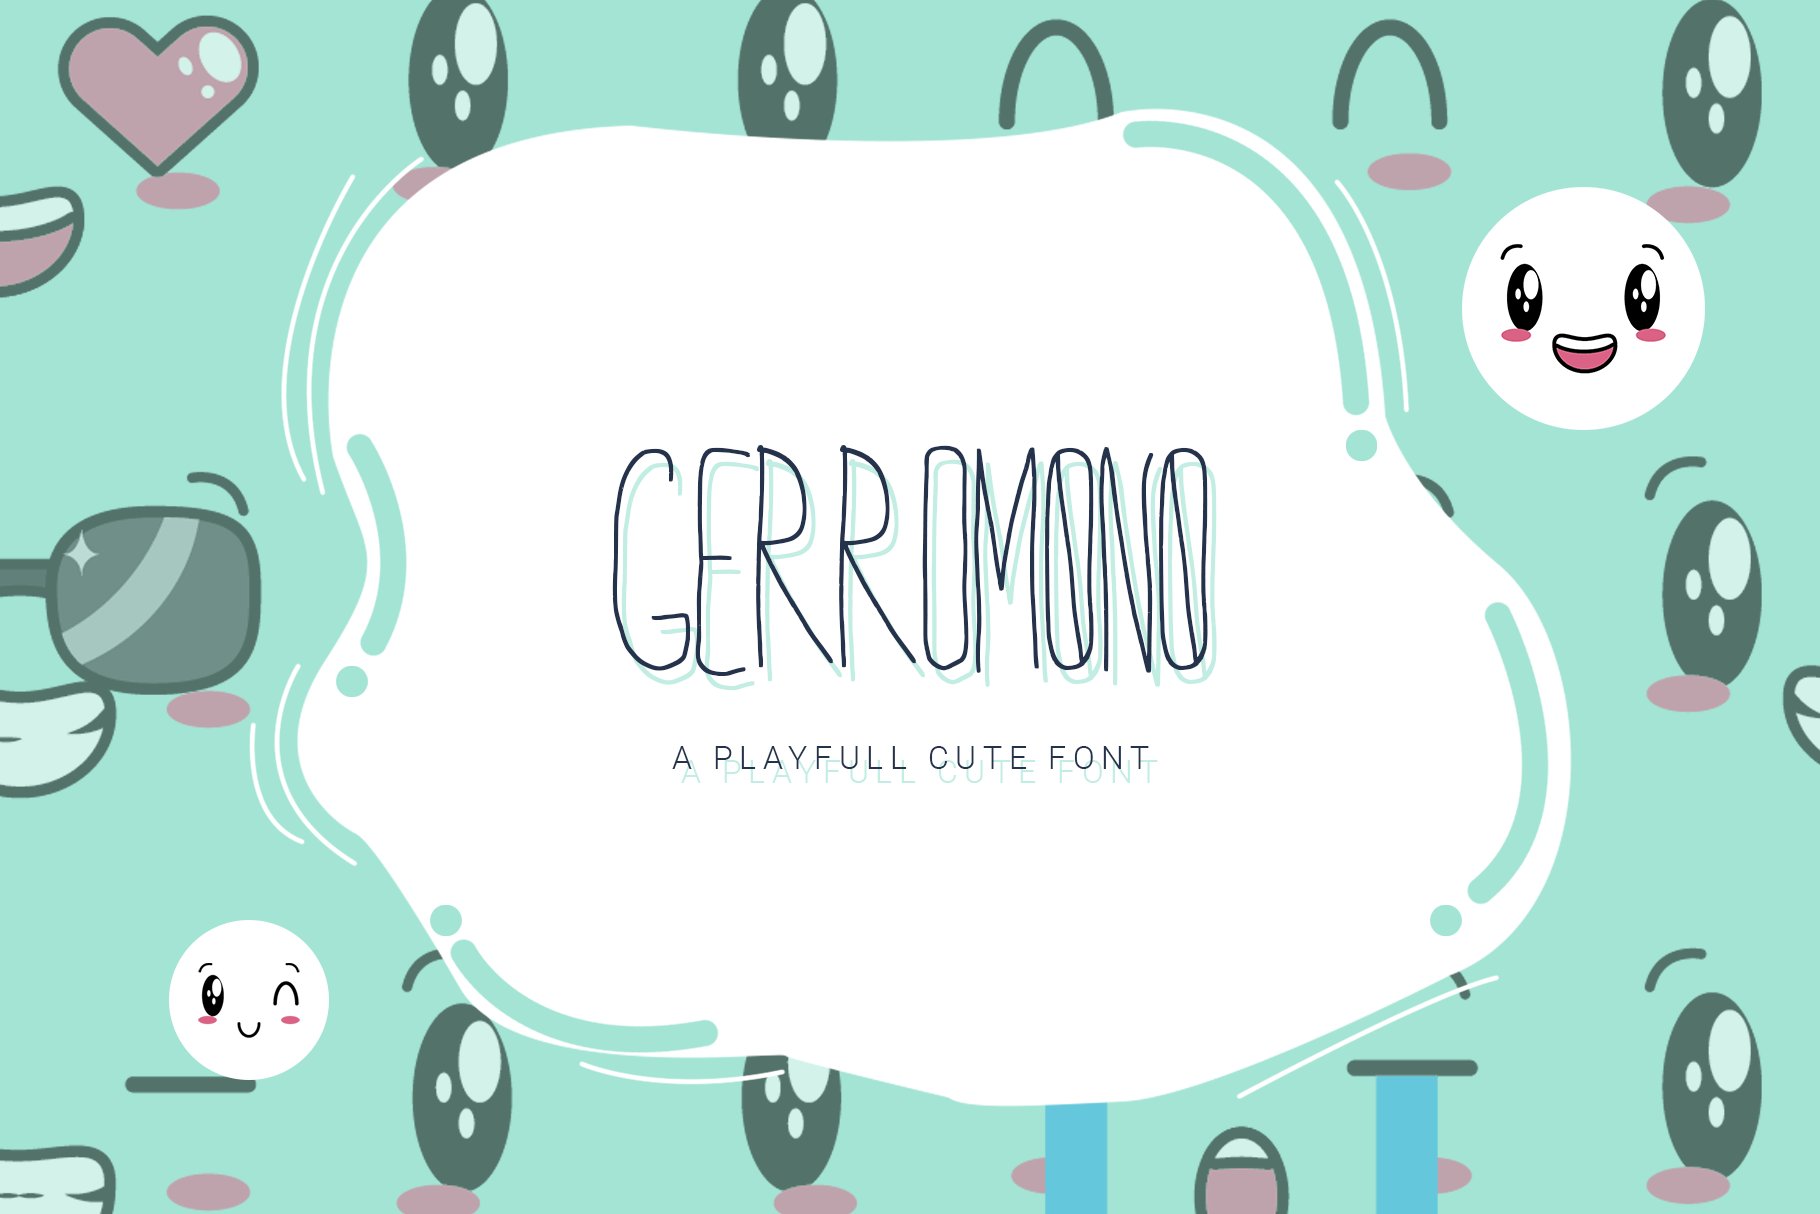 GERROMONO Playful Font cover image.